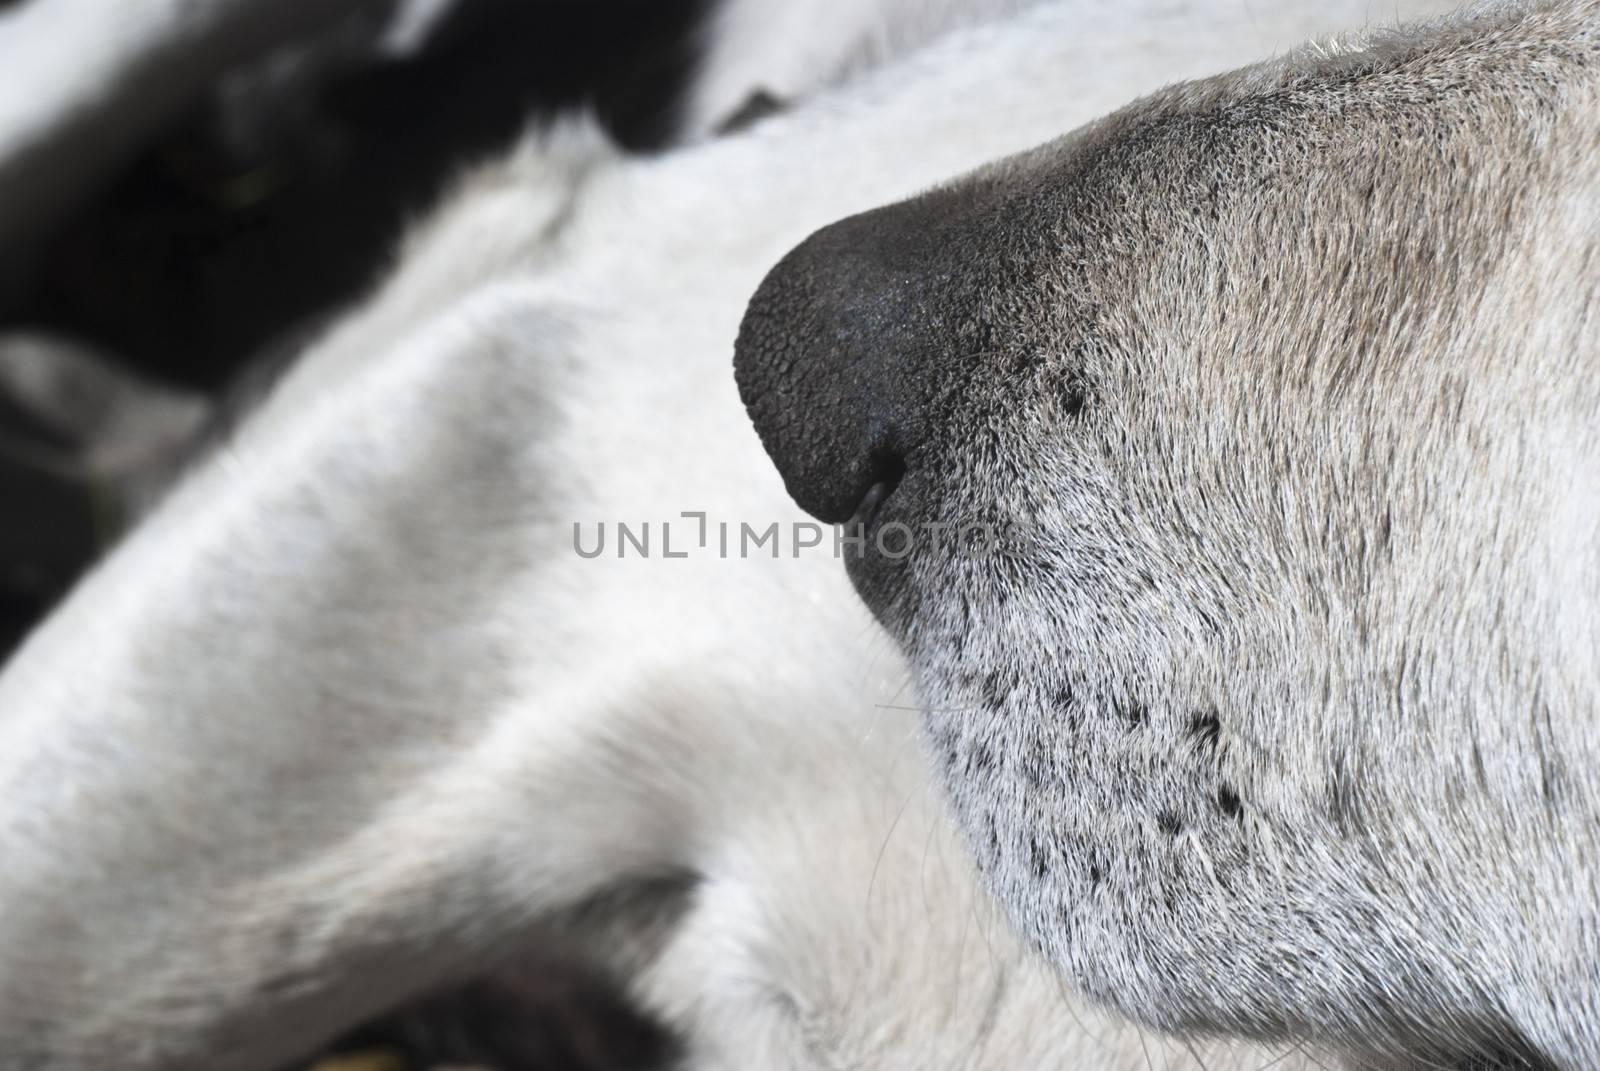 dog nose close up by gandolfocannatella